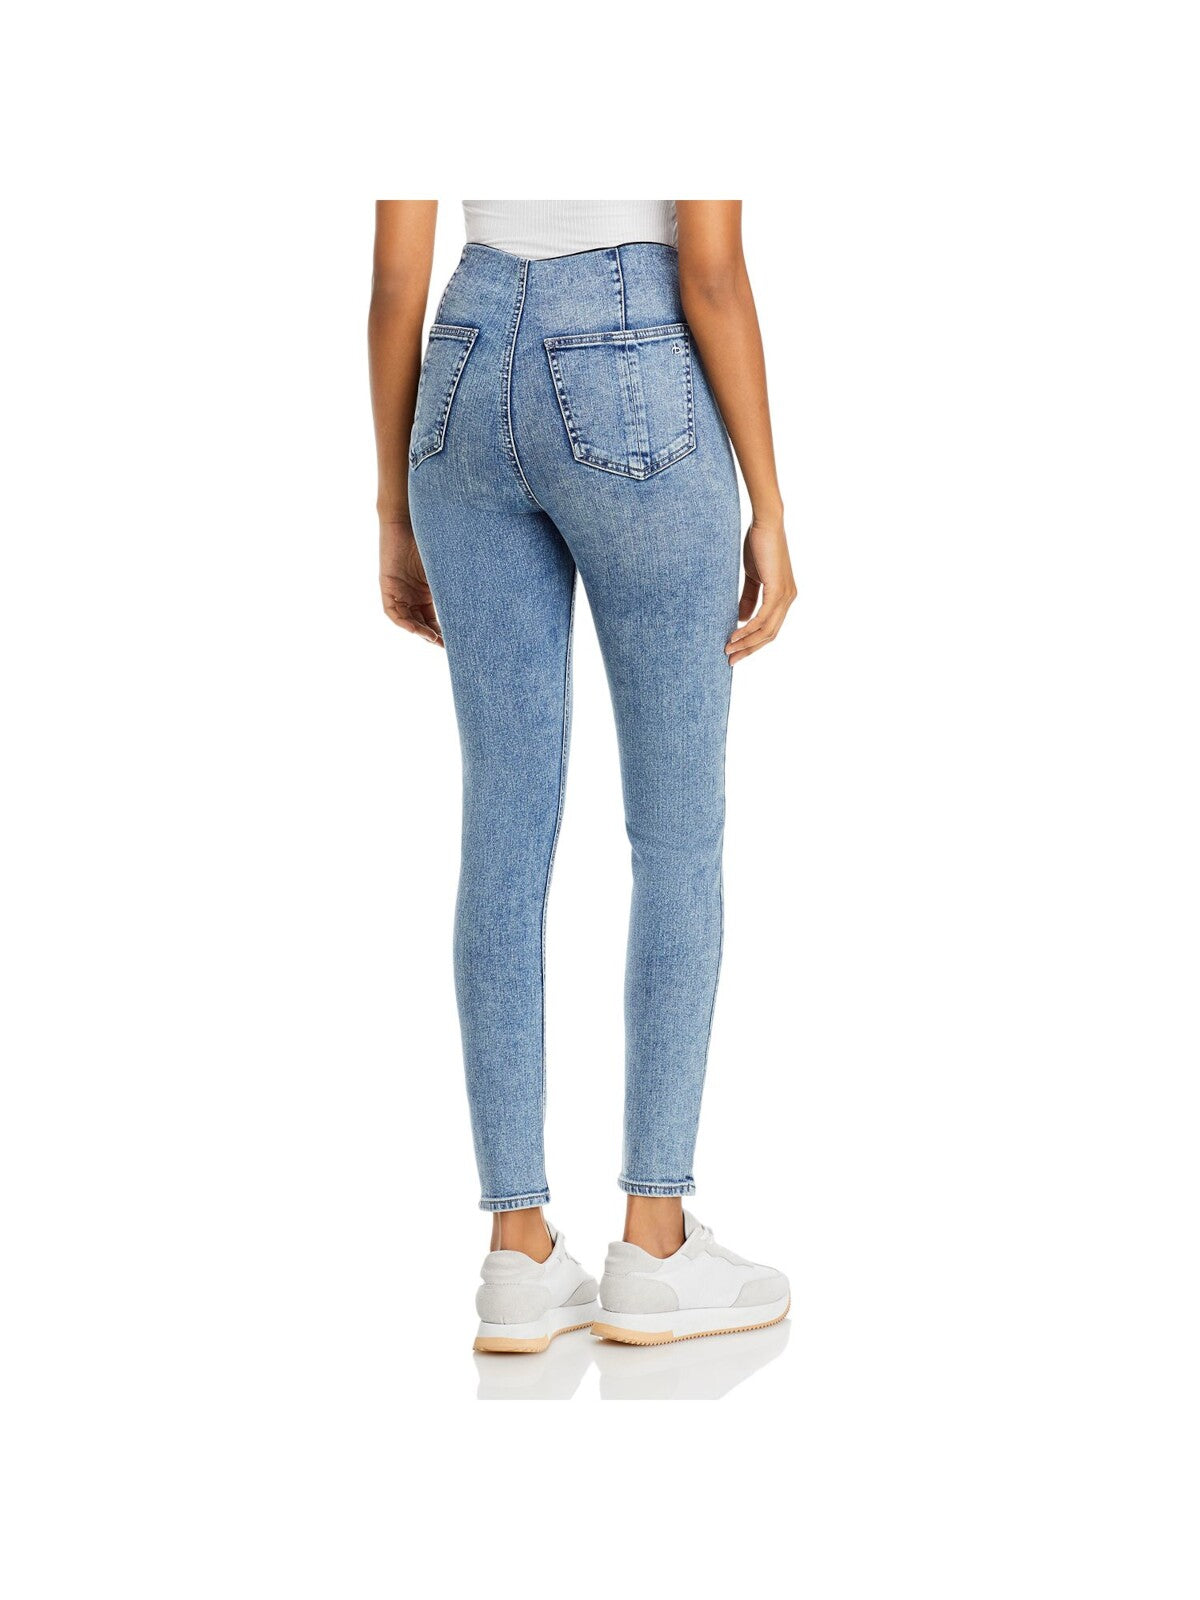 RAG & BONE Womens Blue Stretch Pocketed Skinny High Waist Jeans XL